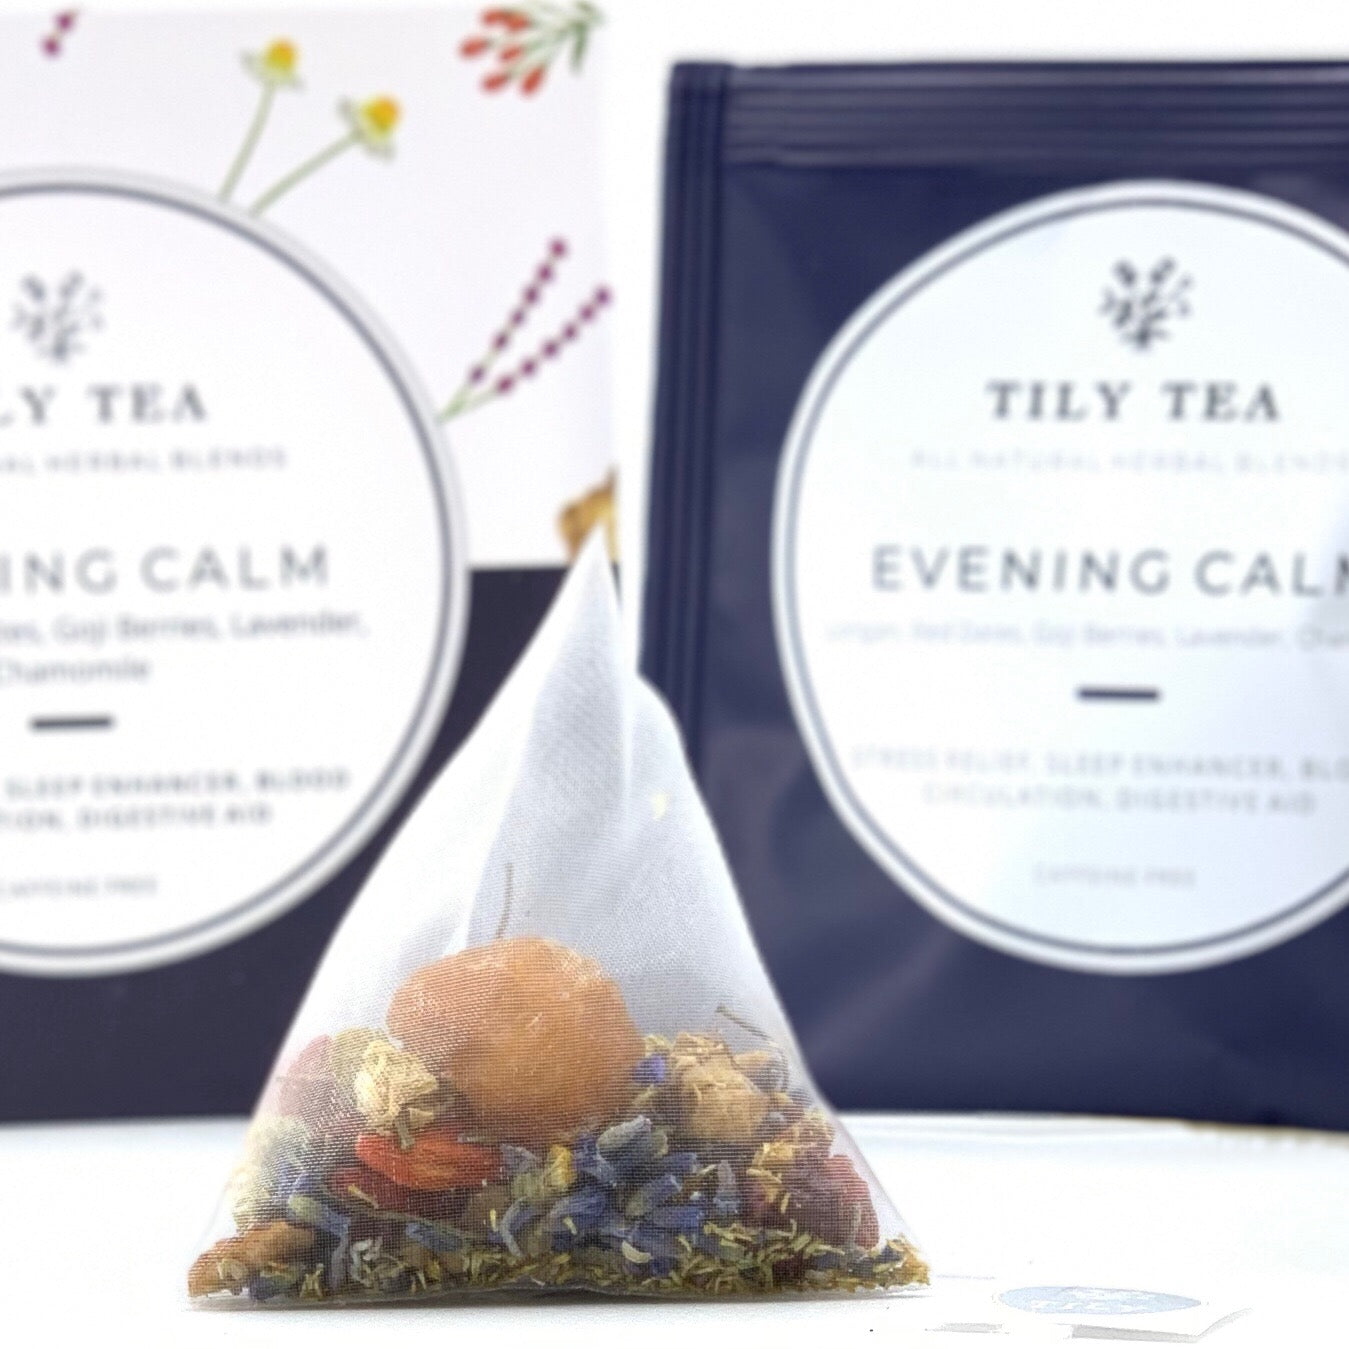 Evening Calm - Tily Tea